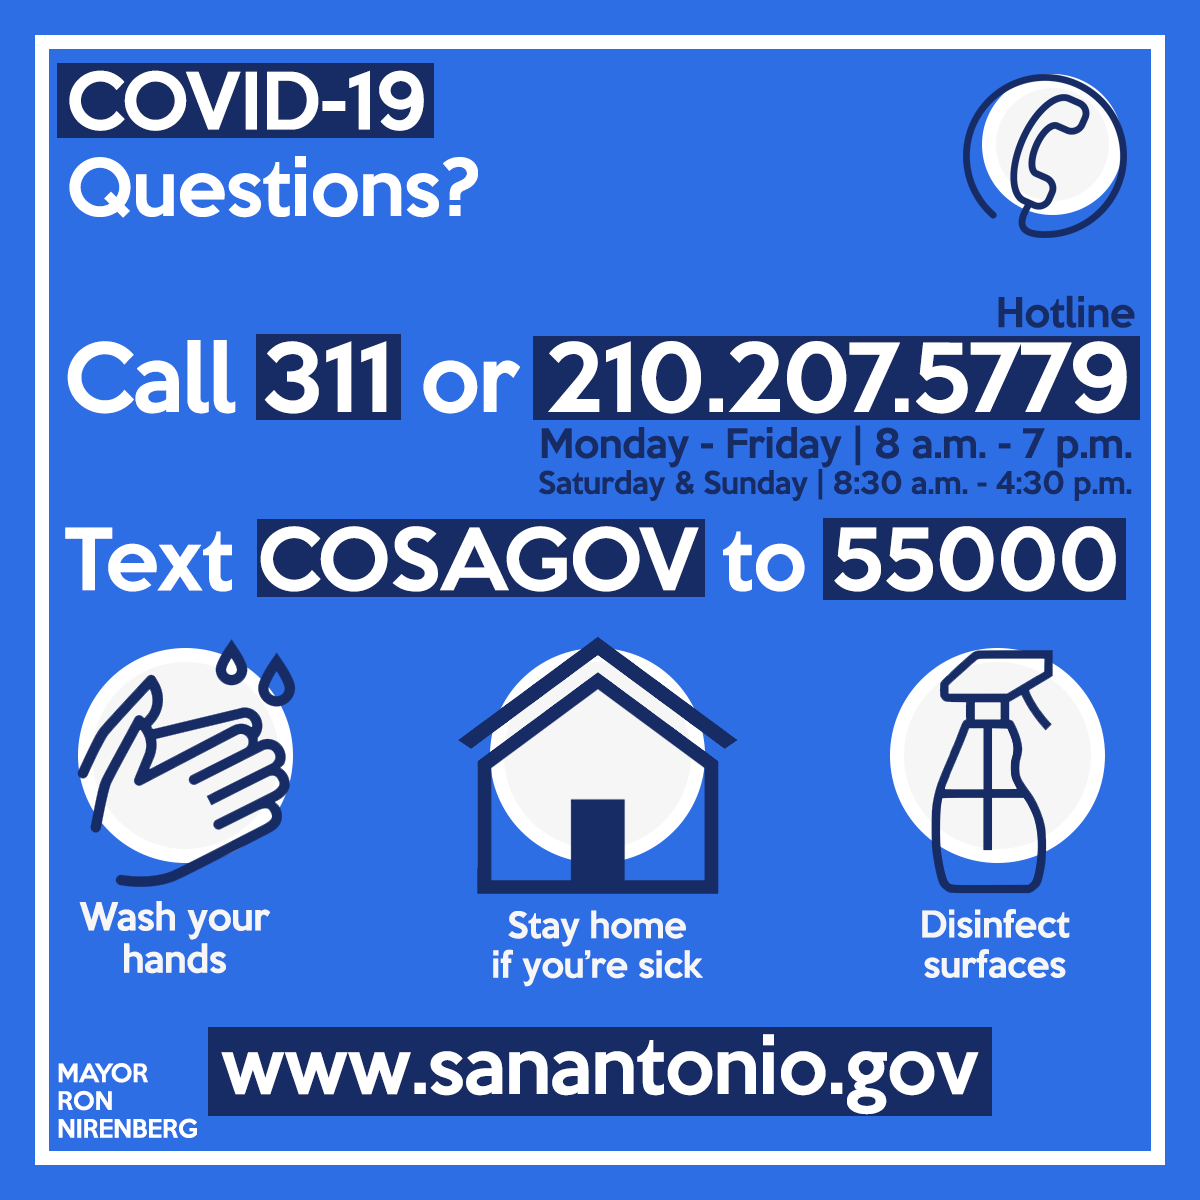 COMMUNICATION PORTALS:San Antonio COVID-19 website: https://sanantonio.gov/Health/News/Alerts/CoronaVirusAmerican Sign Language: http://sat.ahasalerts.com/ActiveAlerts.aspx?id=1334COVID-19 Hotline: 210.207.5779Text COSAGOV to 55000 for text alertsReady South Texas app: https://readysouthtexasapp.com 14/15